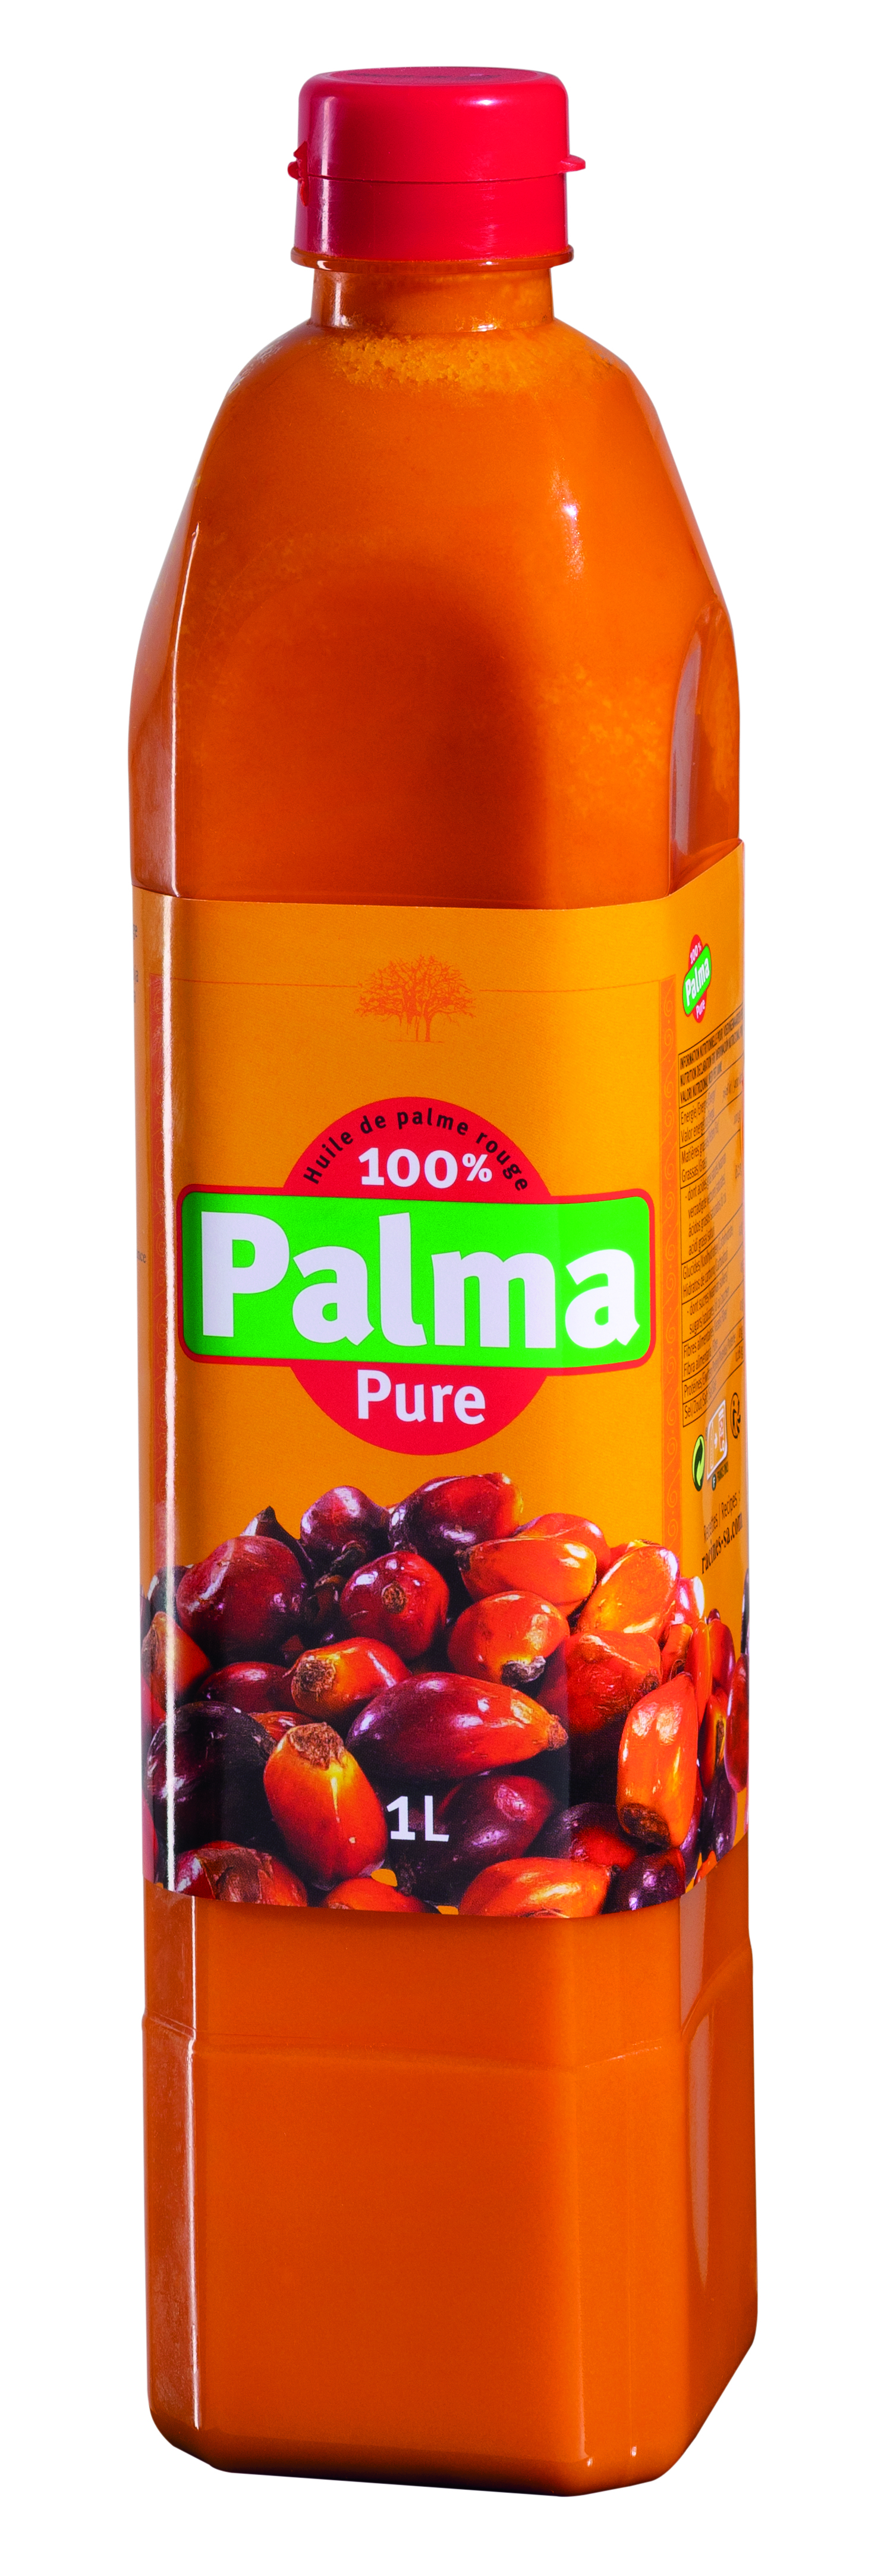 Palma Olio Di Palma Rosso 12 X 100 Cl - PALMA